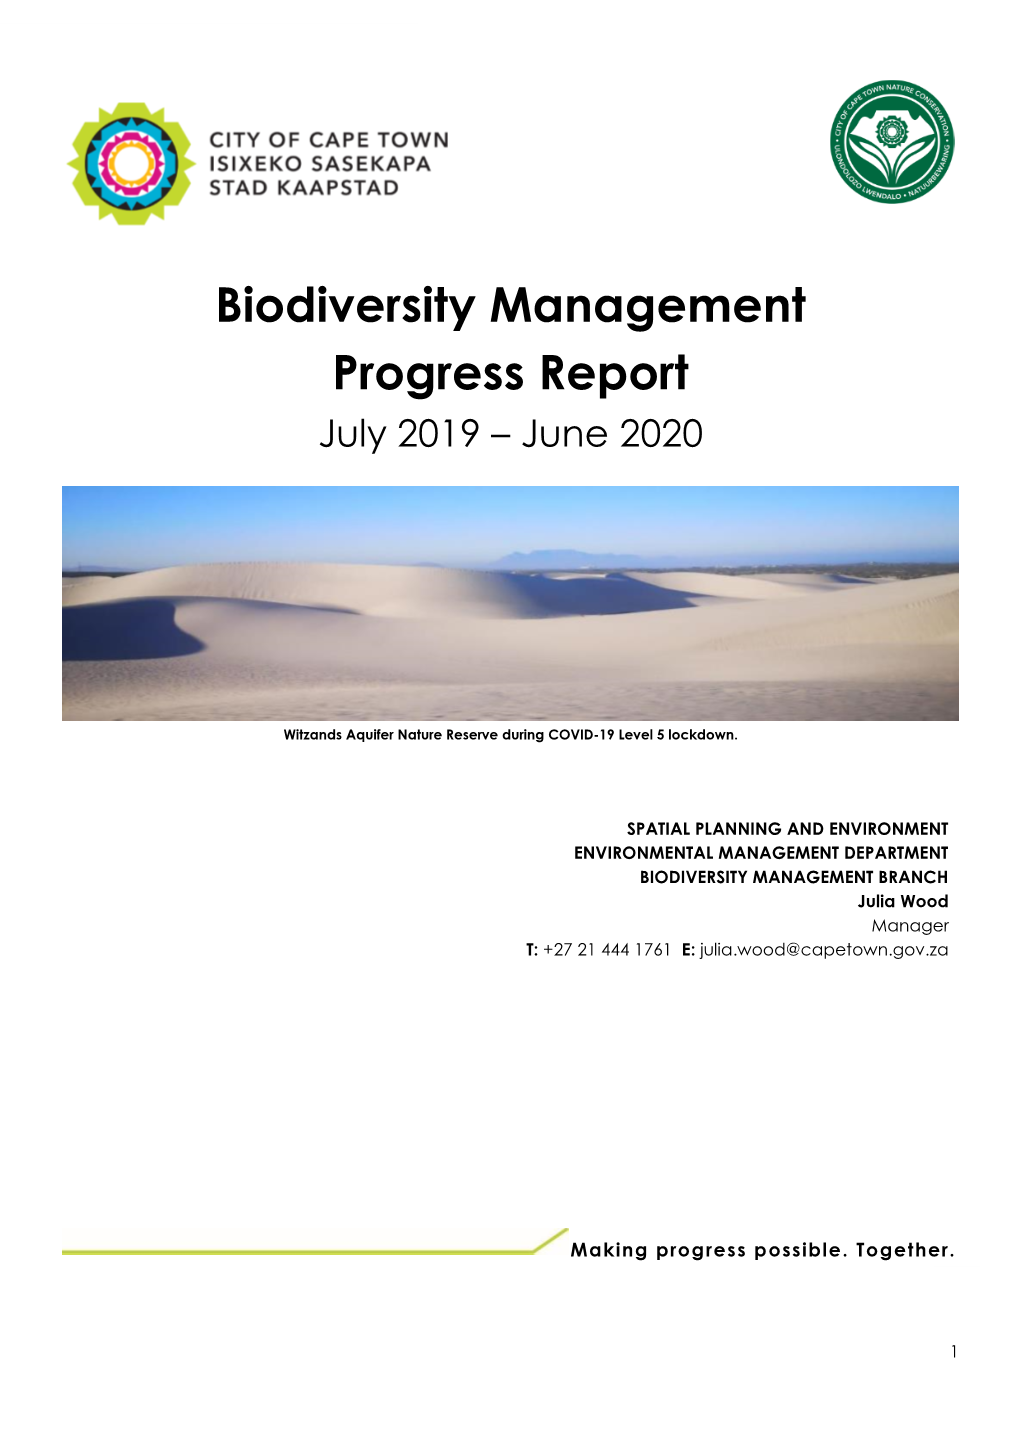 Biodiversity Management Progress Report July 2019 – June 2020